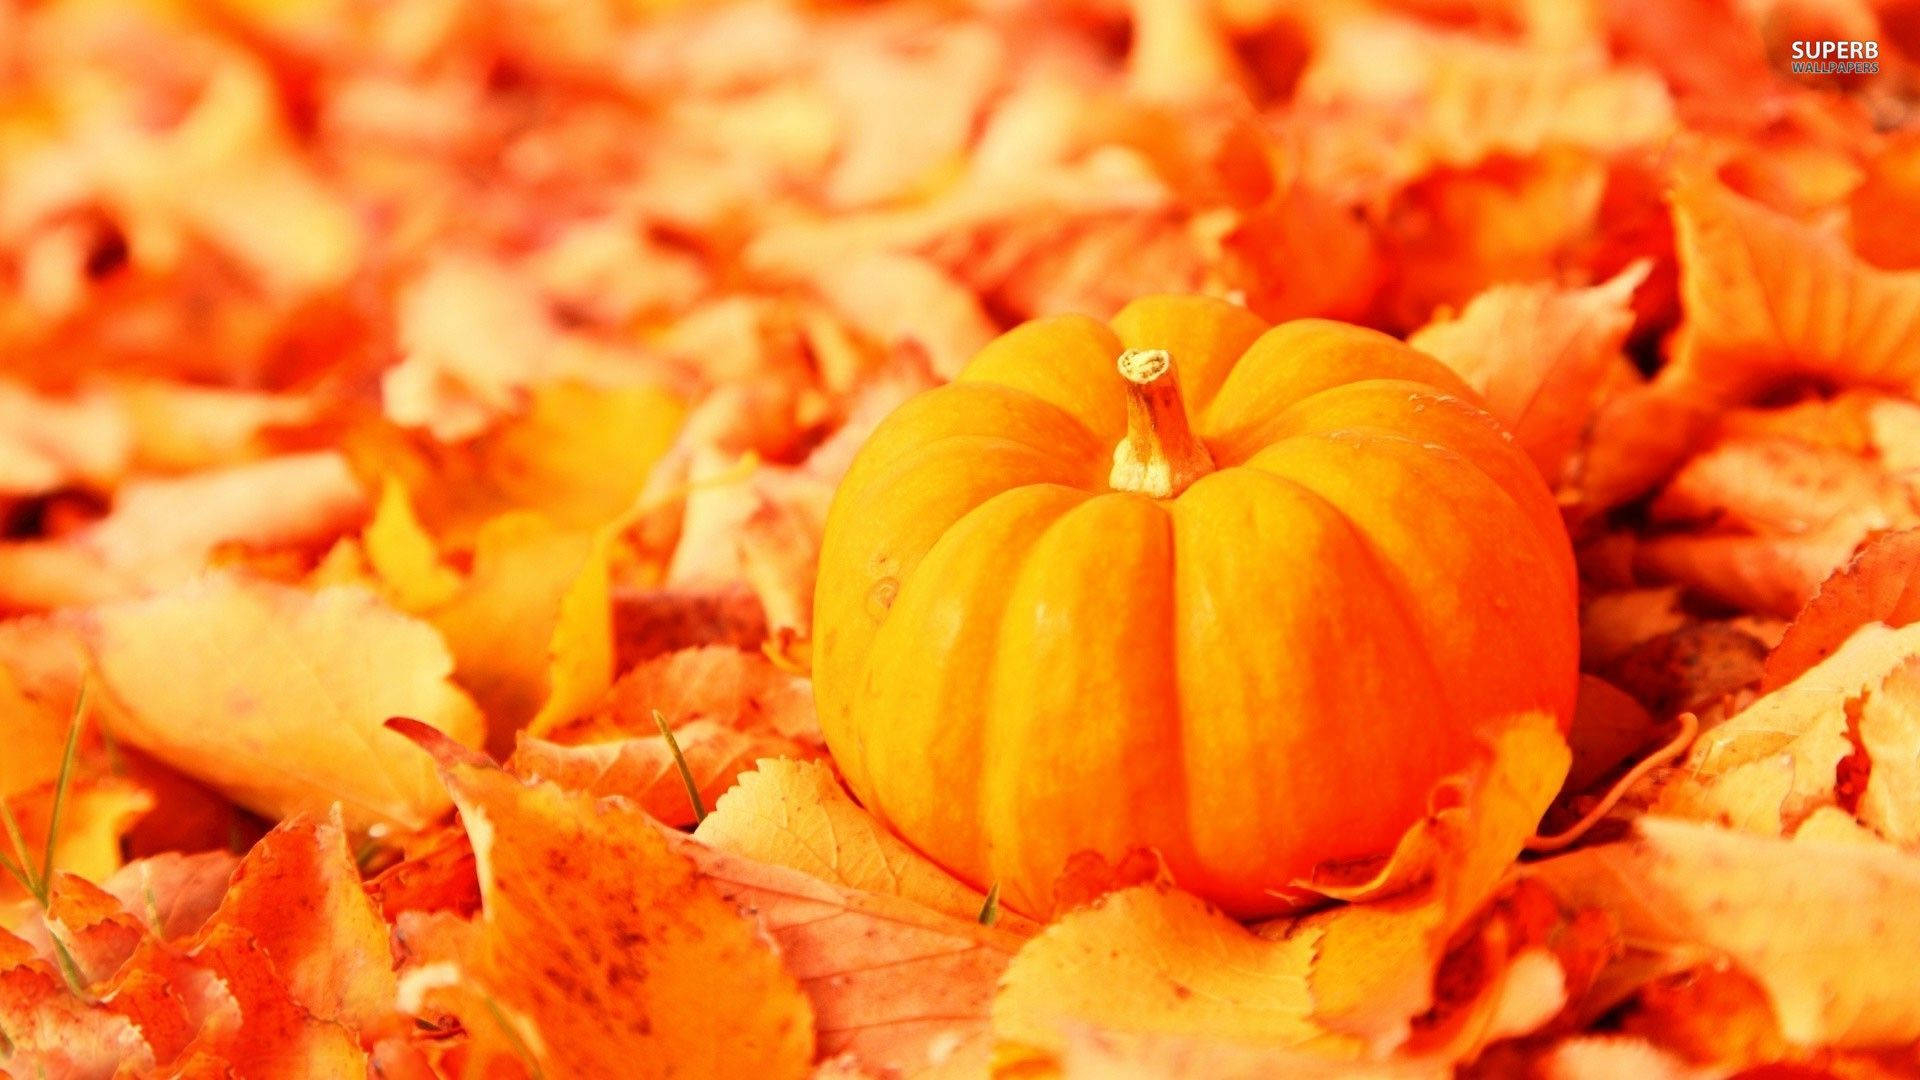 1920x1080 Download Pumpkin In Autumn Wallpaper